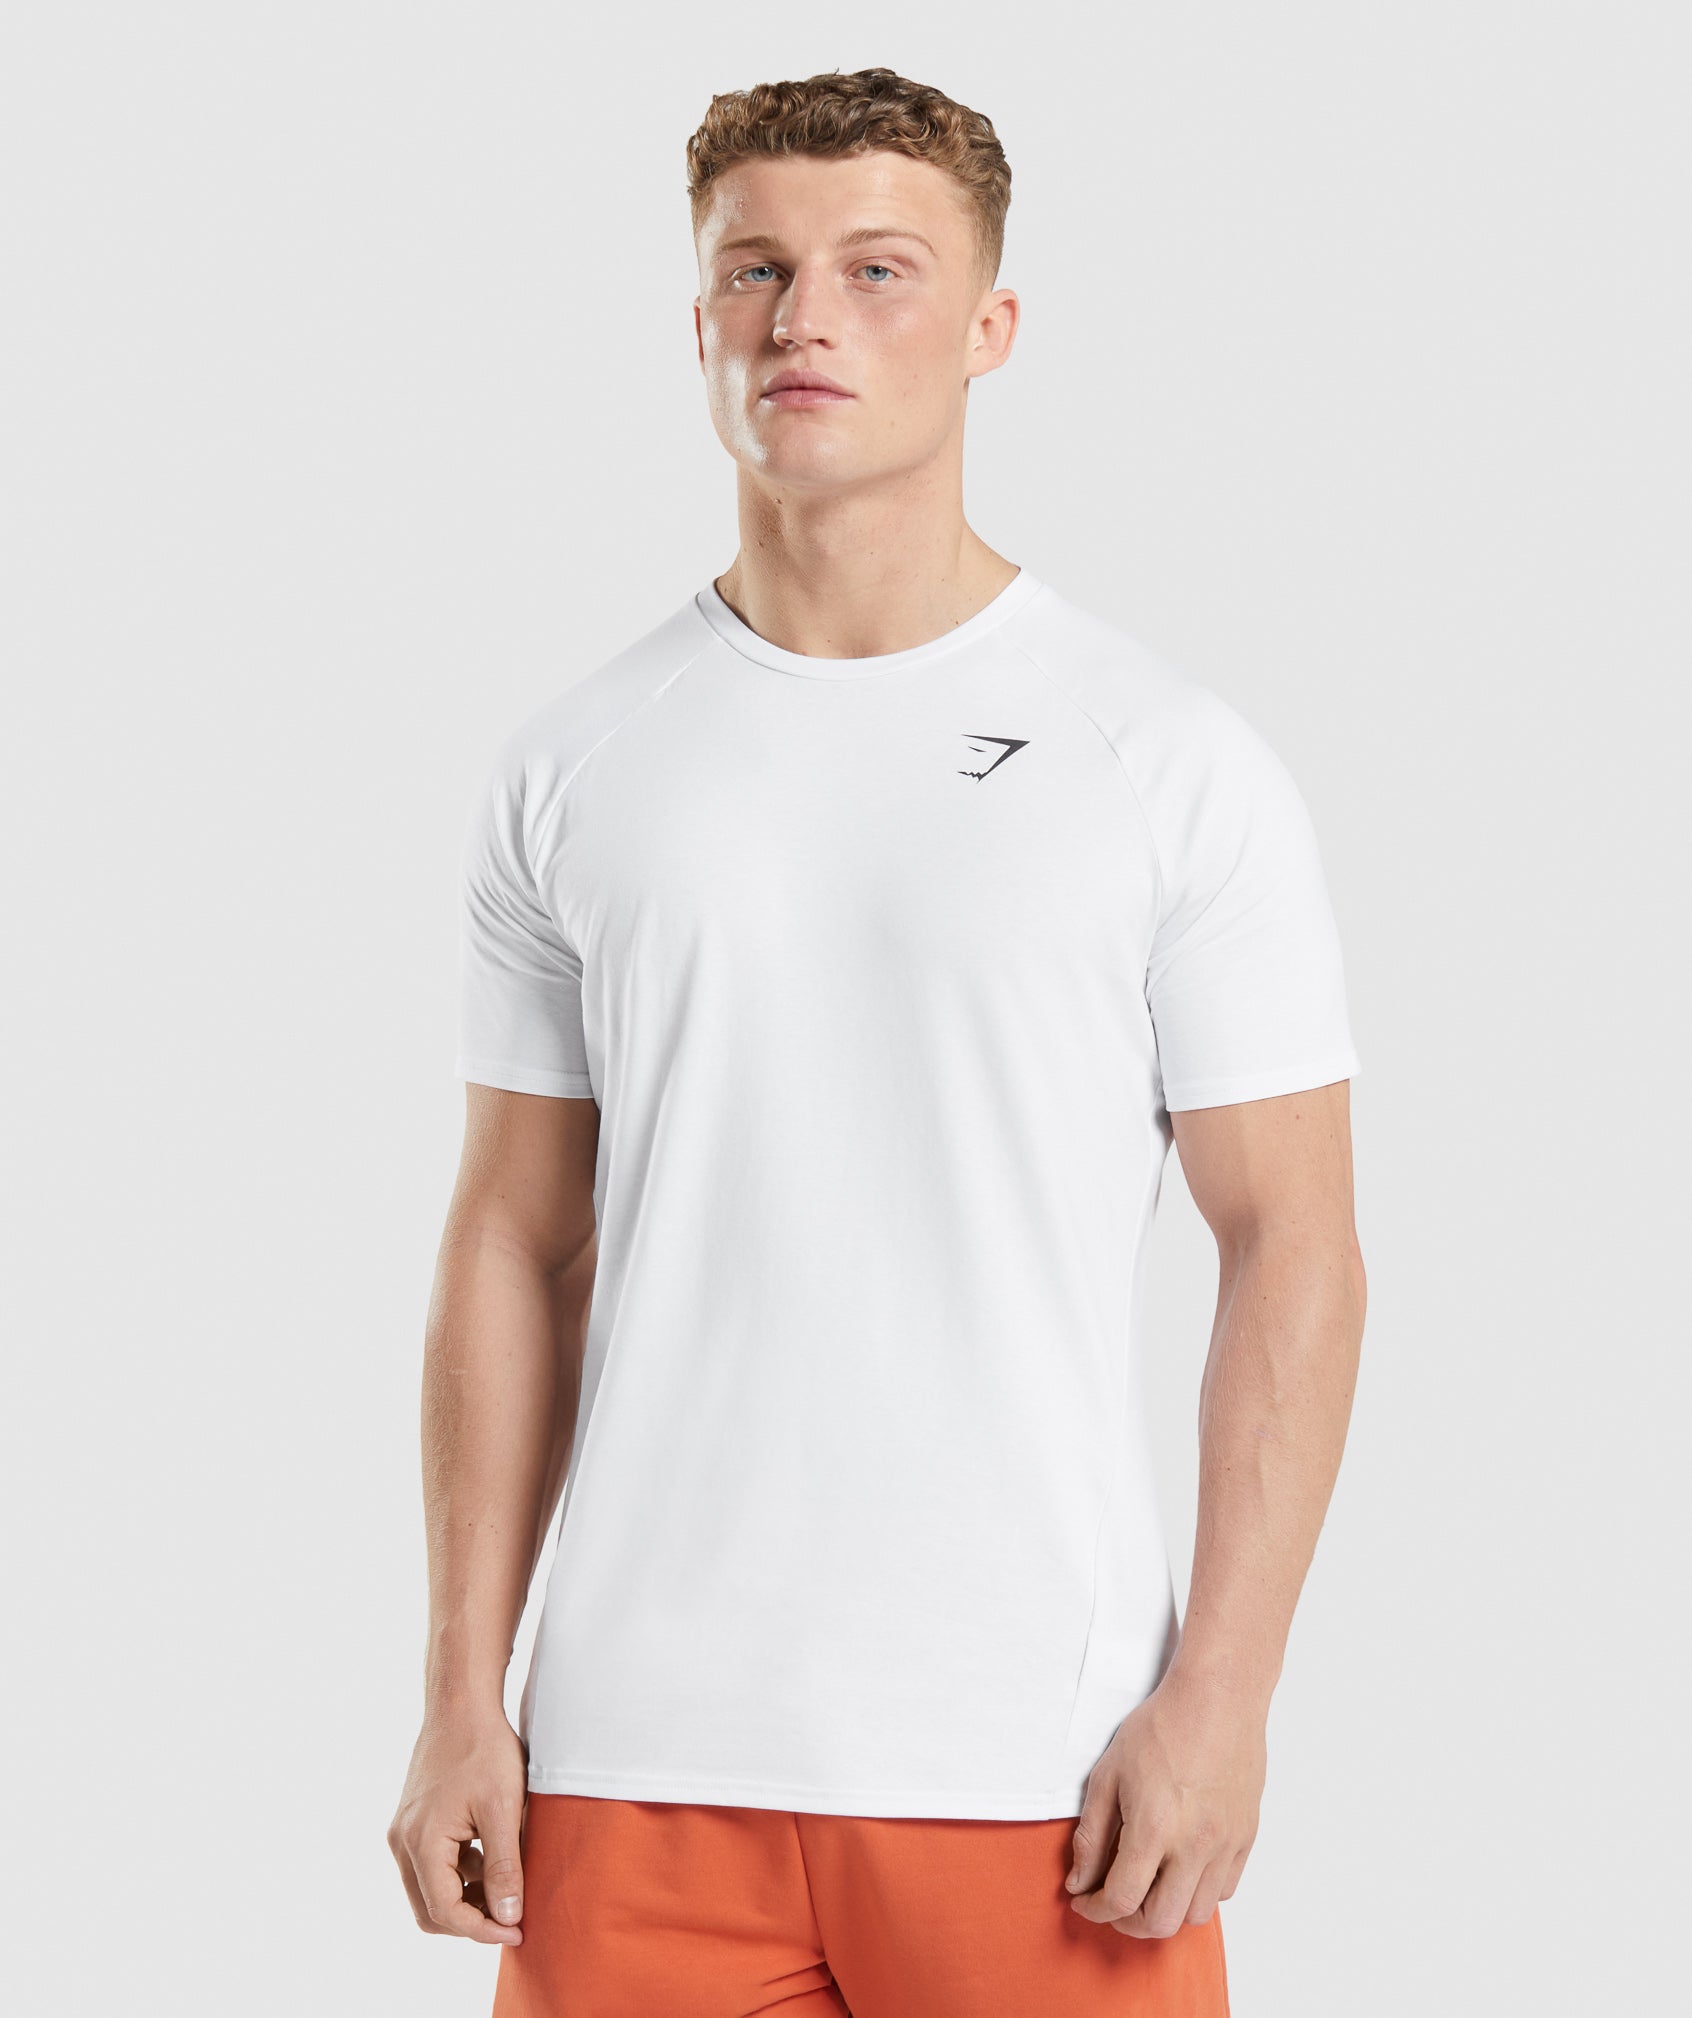 Gymshark Geo Seamless T-Shirt - White/Light Grey